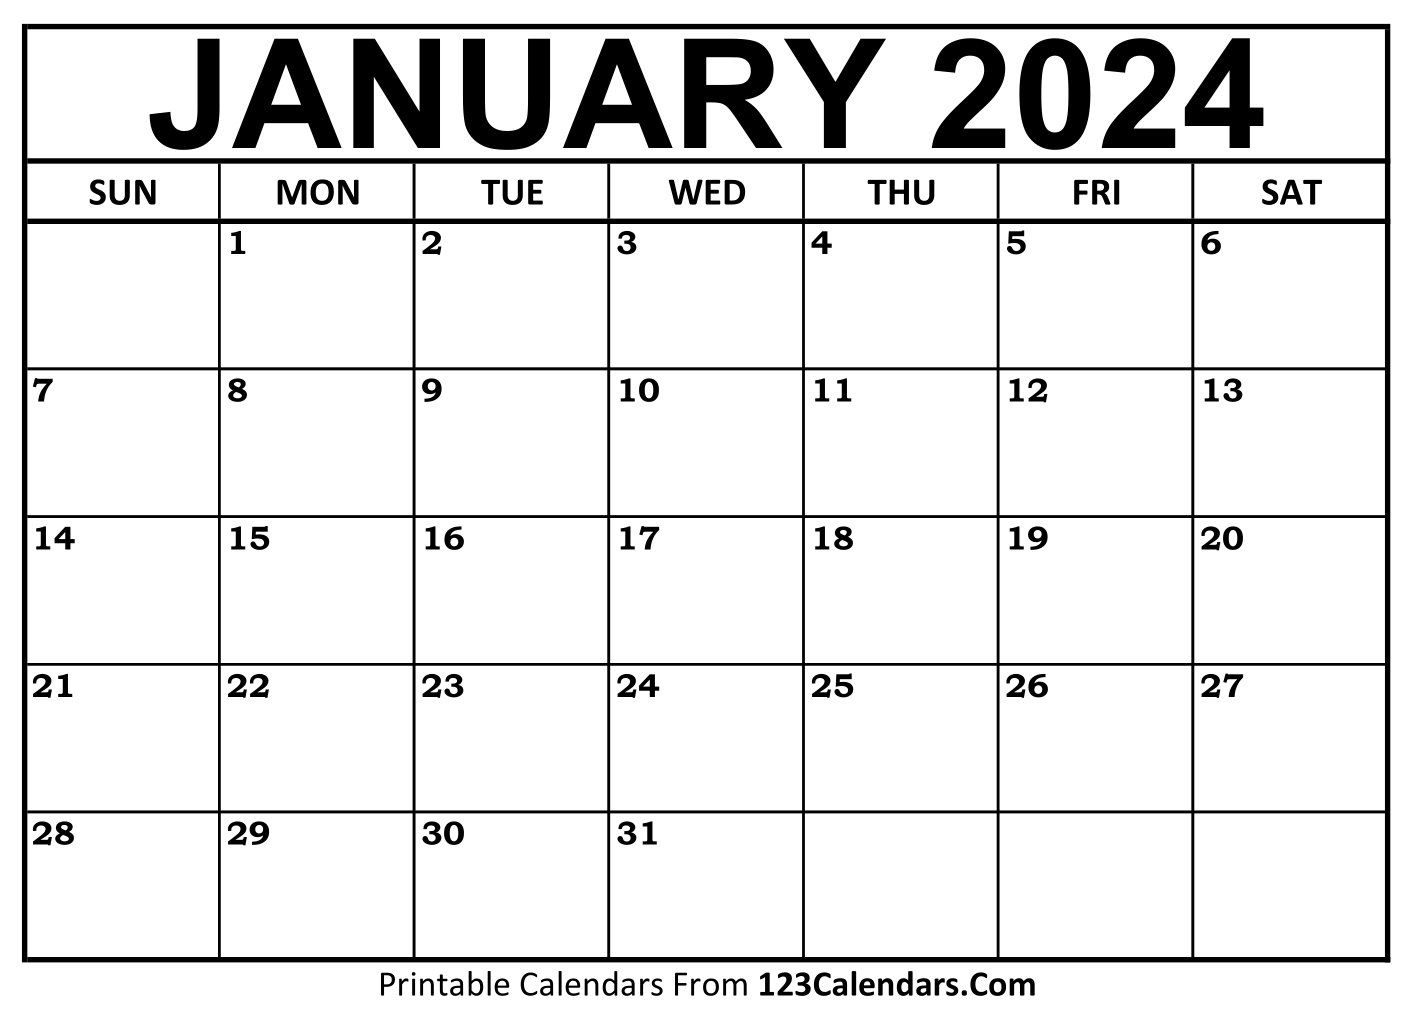 Printable January 2024 Calendar Templates - 123Calendars | Free Printable Calendars 2024